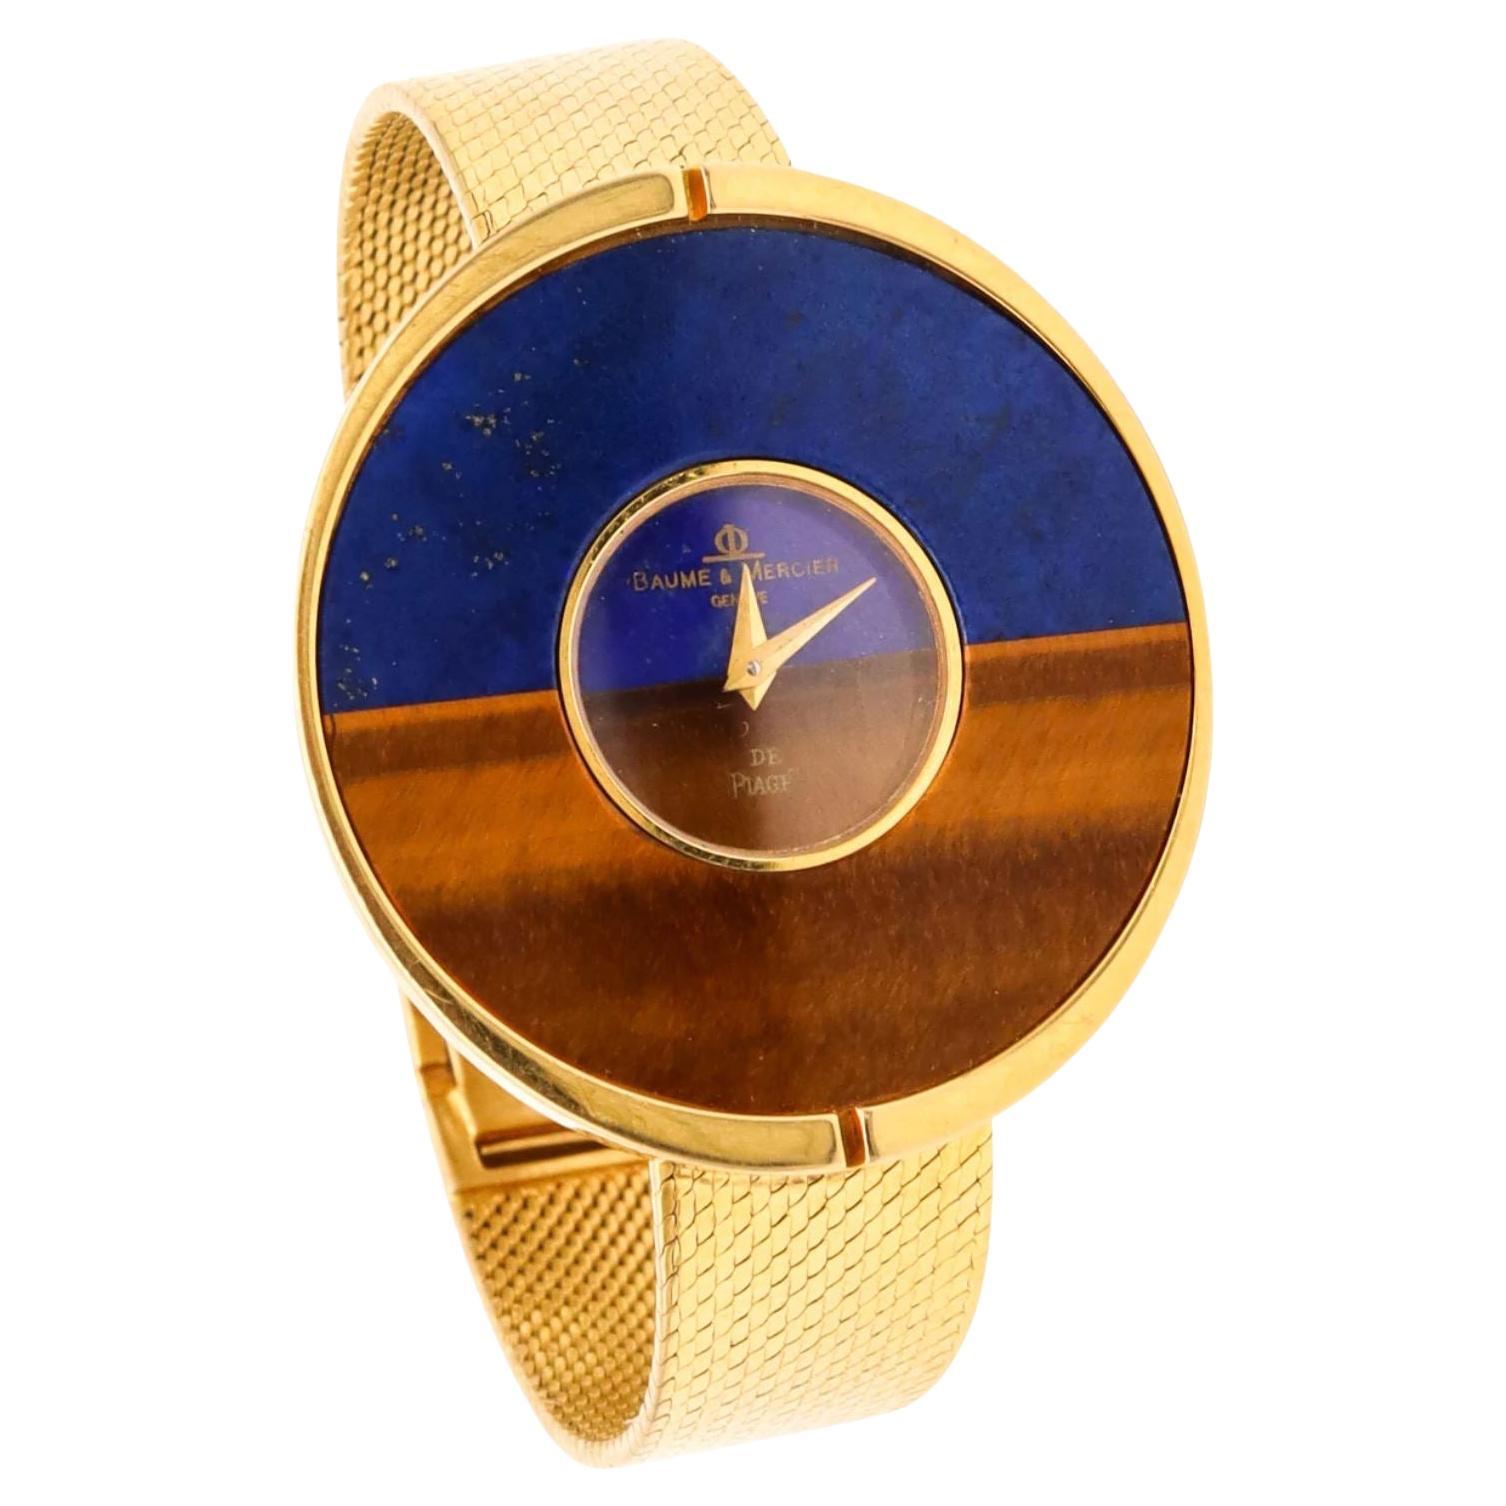 Baume & Mercier Piaget 1970 Retro Modern Bracelet Wristwatch in 18Kt with Lapis For Sale